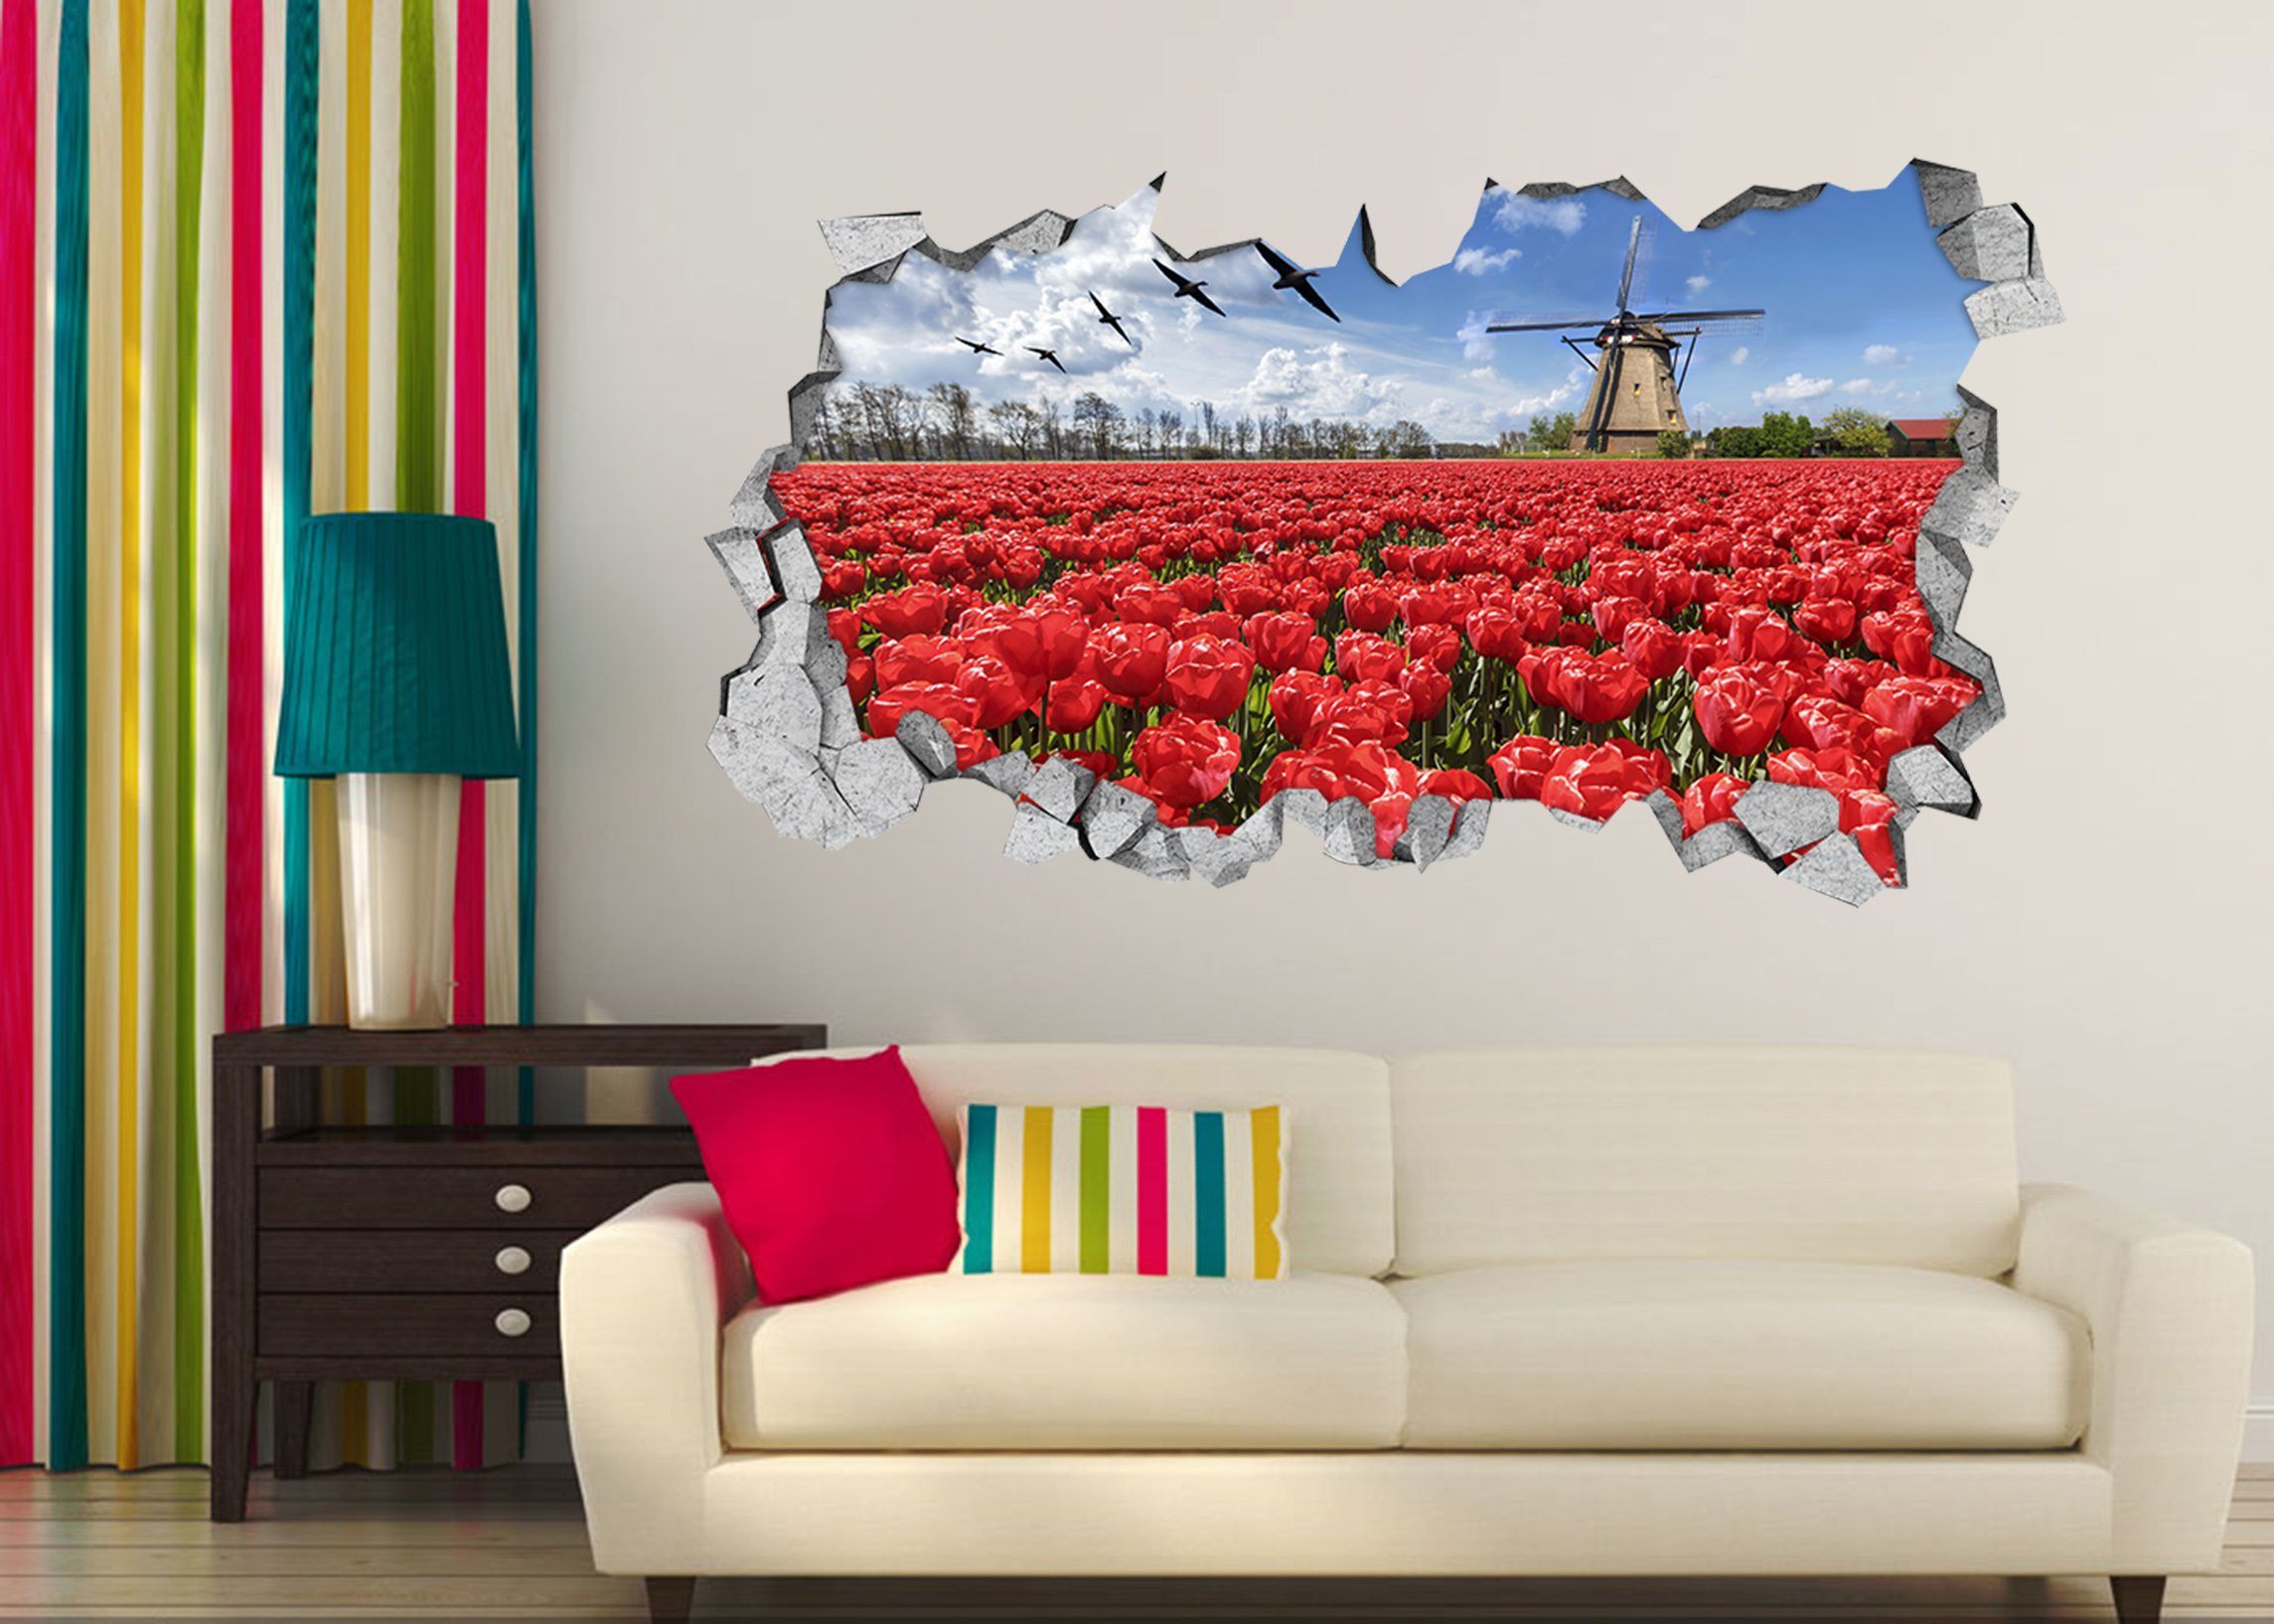 3D Tulip Flowers Field Windmill 180 Broken Wall Murals Wallpaper AJ Wallpaper 